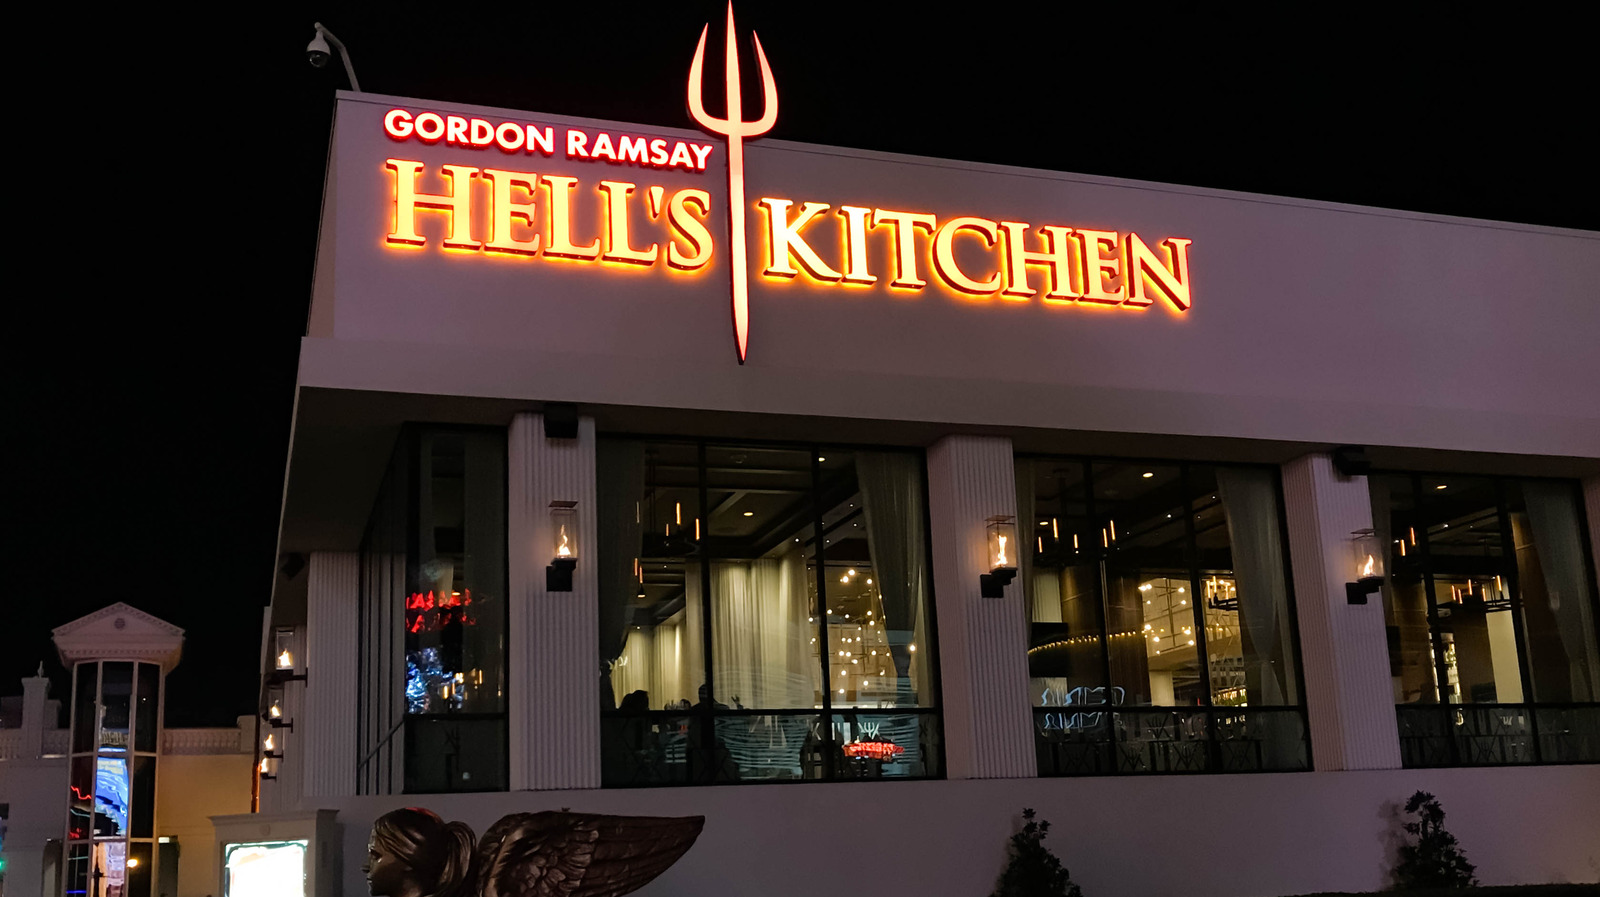 Gordon Ramsay's Hell's Kitchen Will Soon Open On The East Coast